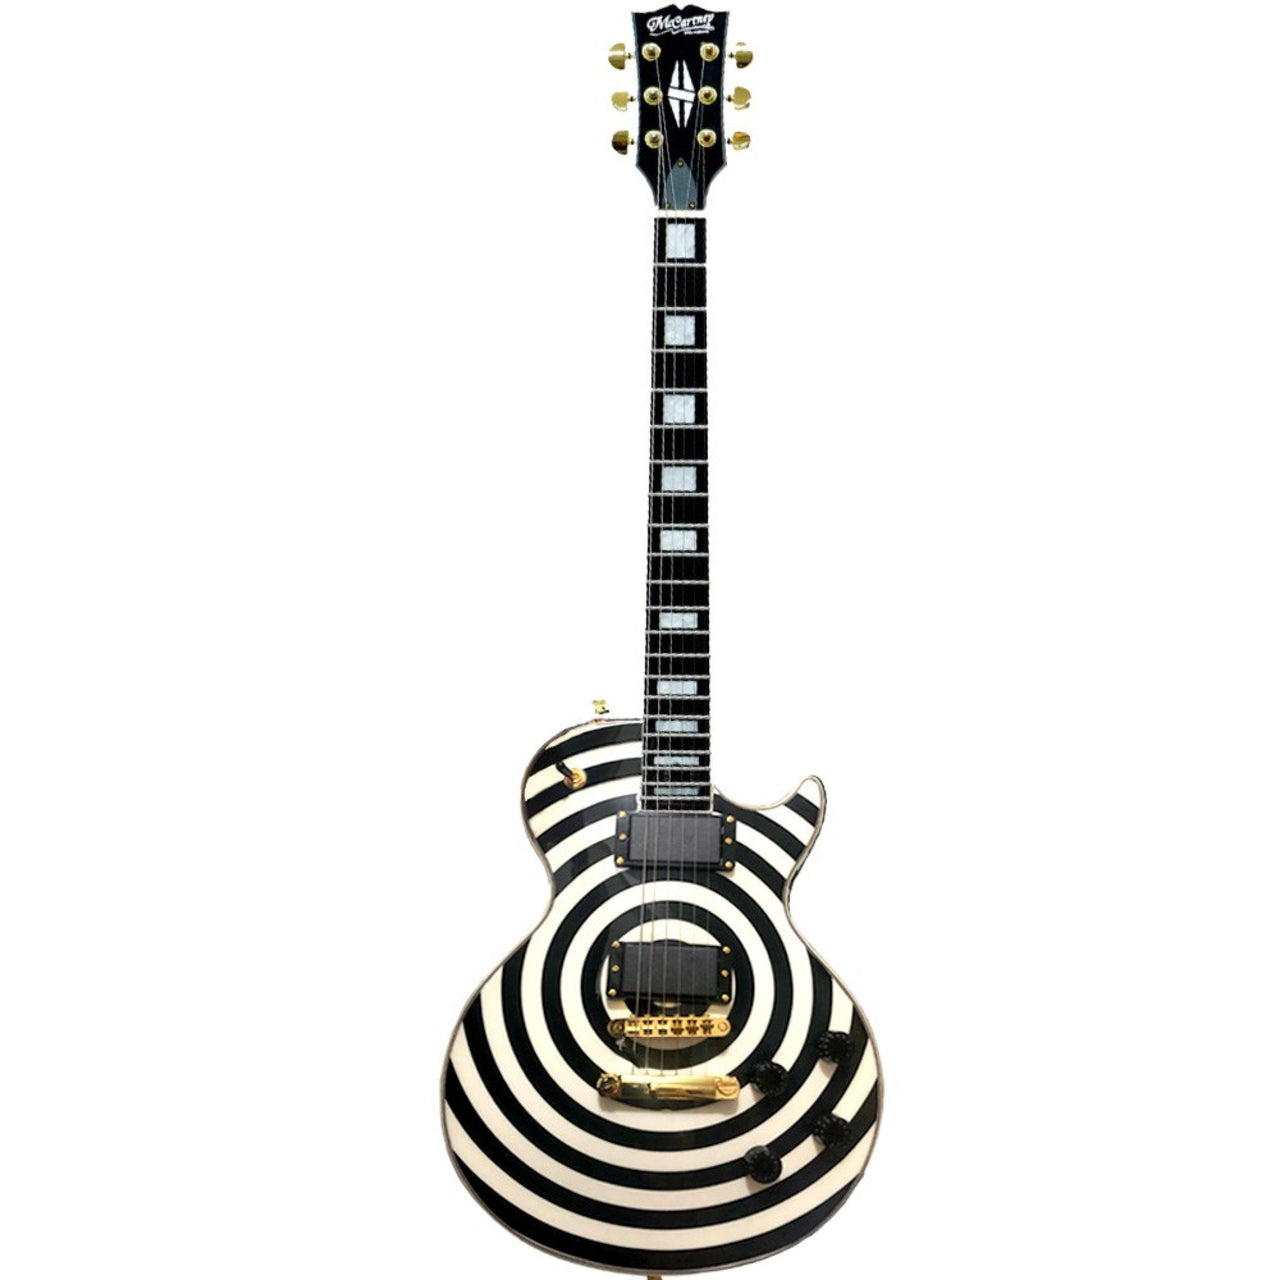 Guitarra Electrica Mc Cartney E-seg 277 bk-wh  Lp Custom Zak Wylde